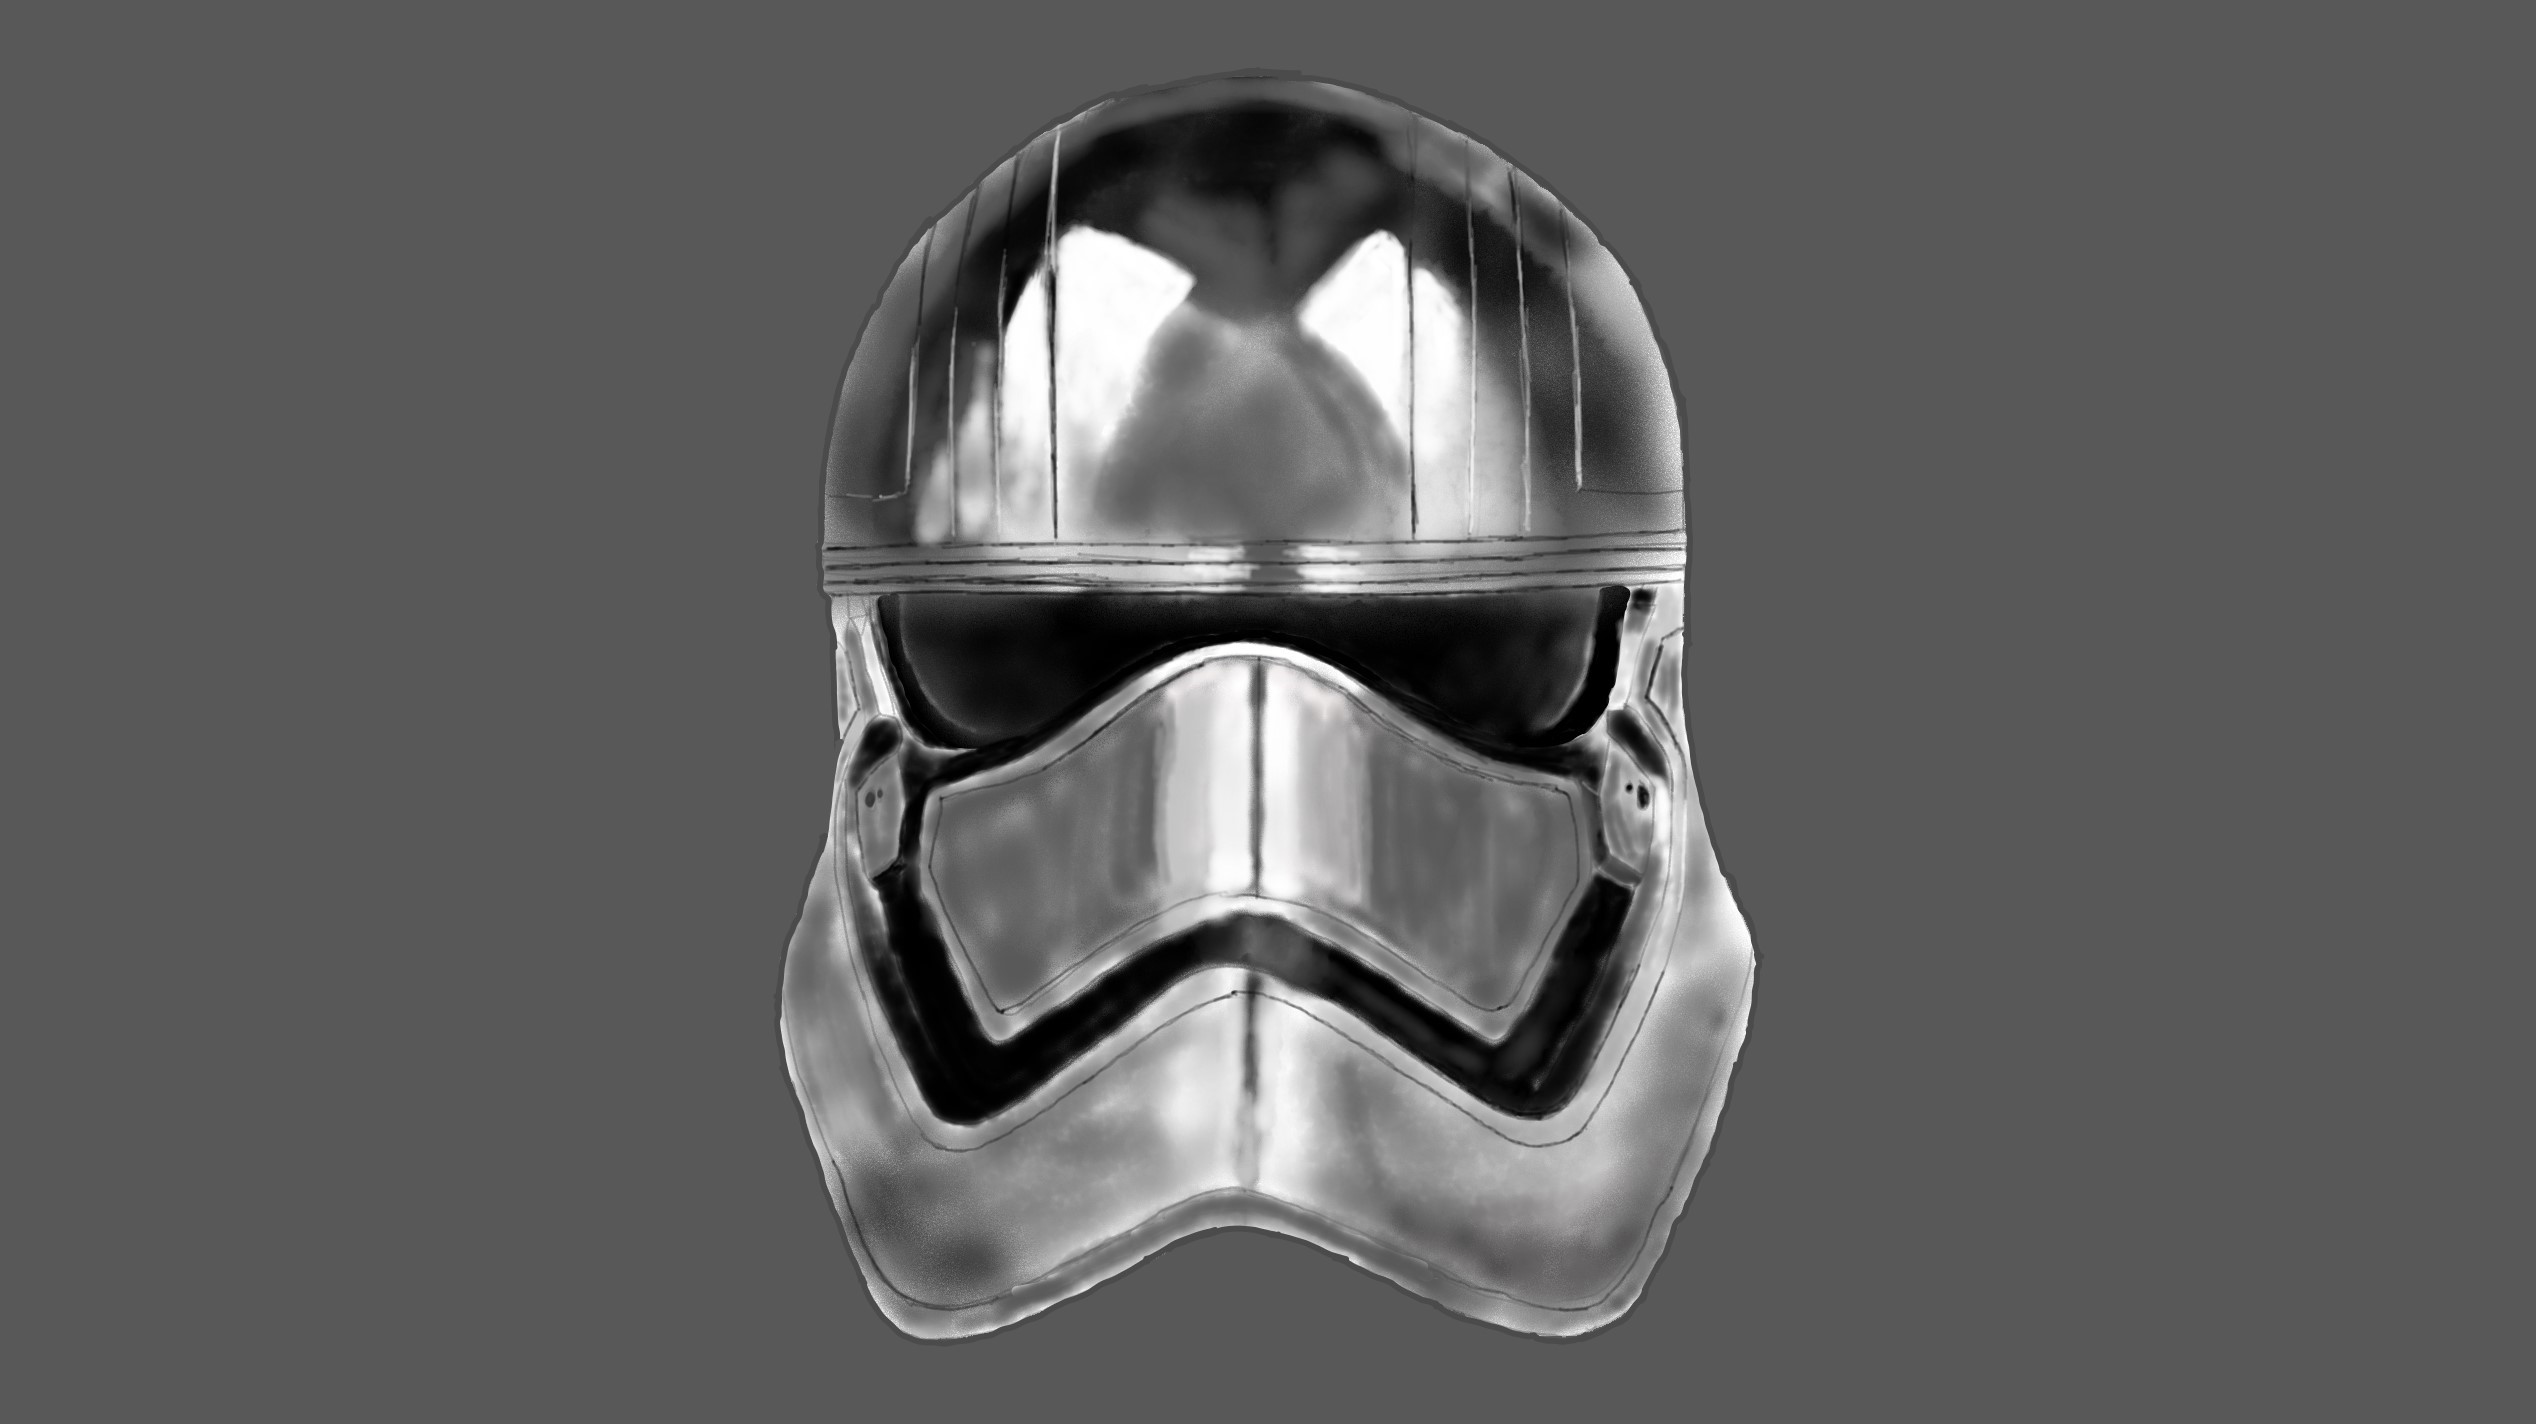 Anime 2536x1424 Star Wars Heroes Star Wars Captain Phasma helmet Imperial Stormtrooper gray gray background